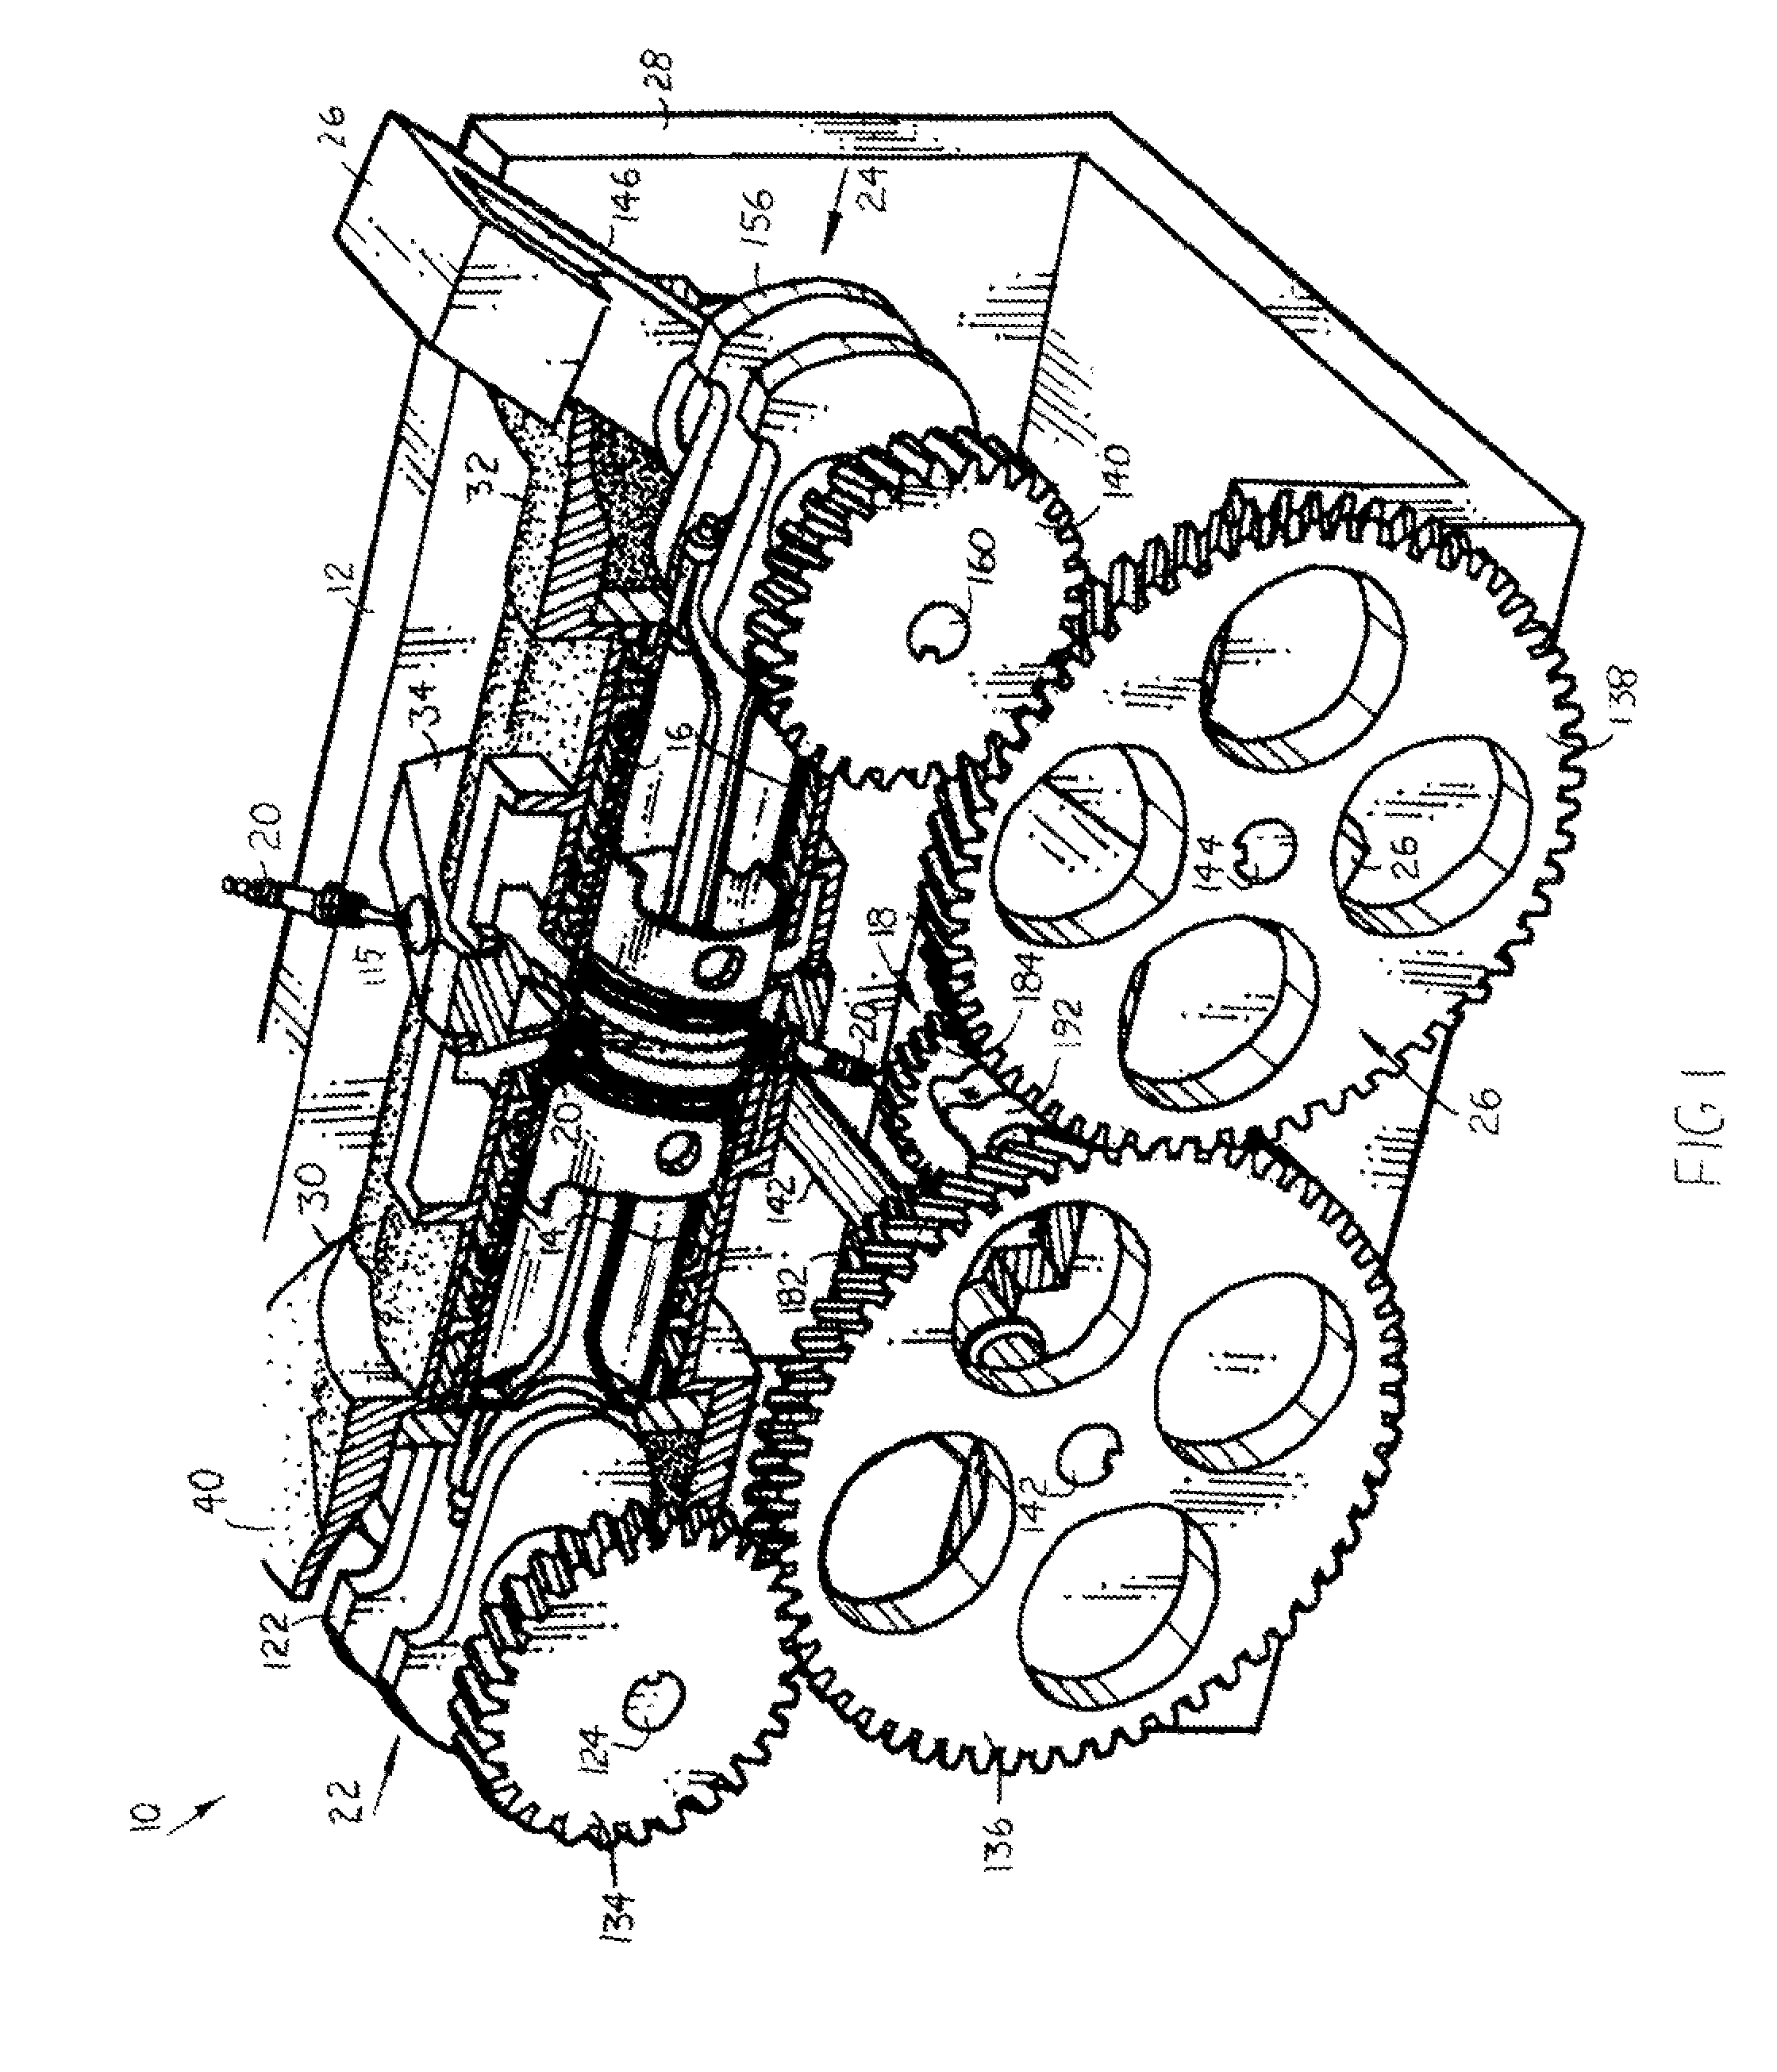 Internal combustion engine